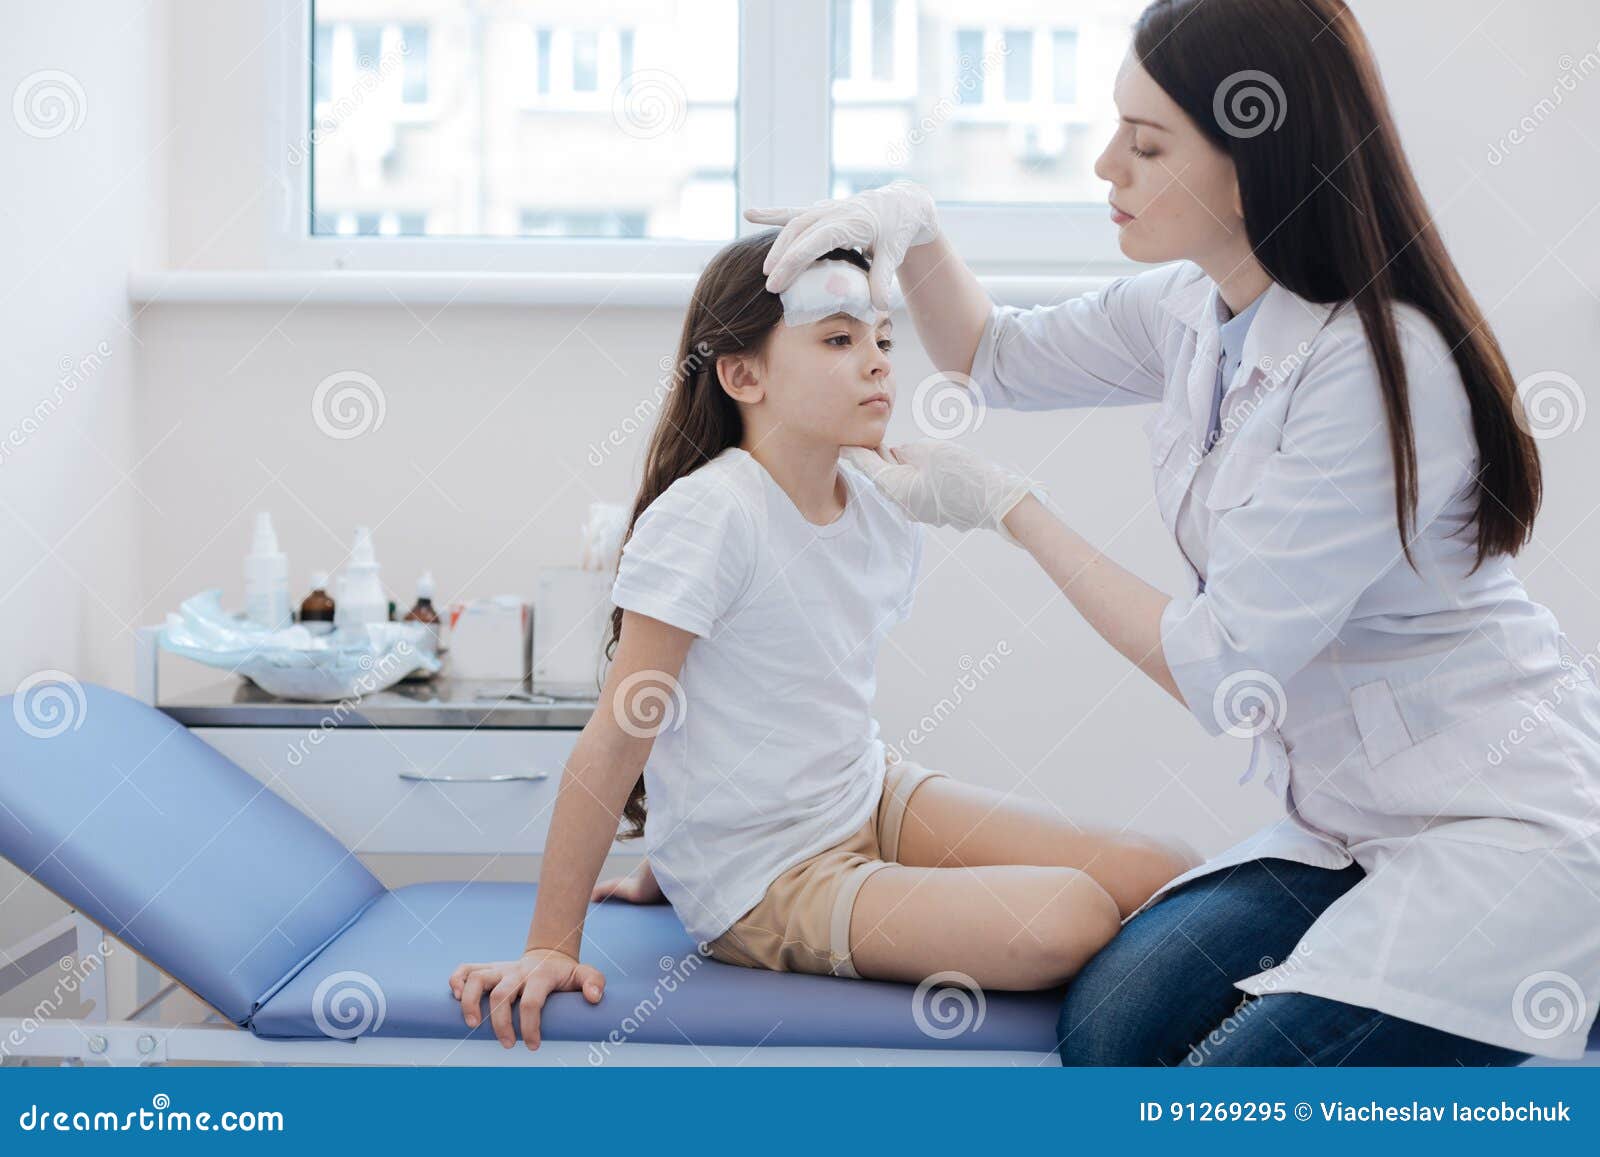 Little Girl Medical Examination Images - Download 6,091 